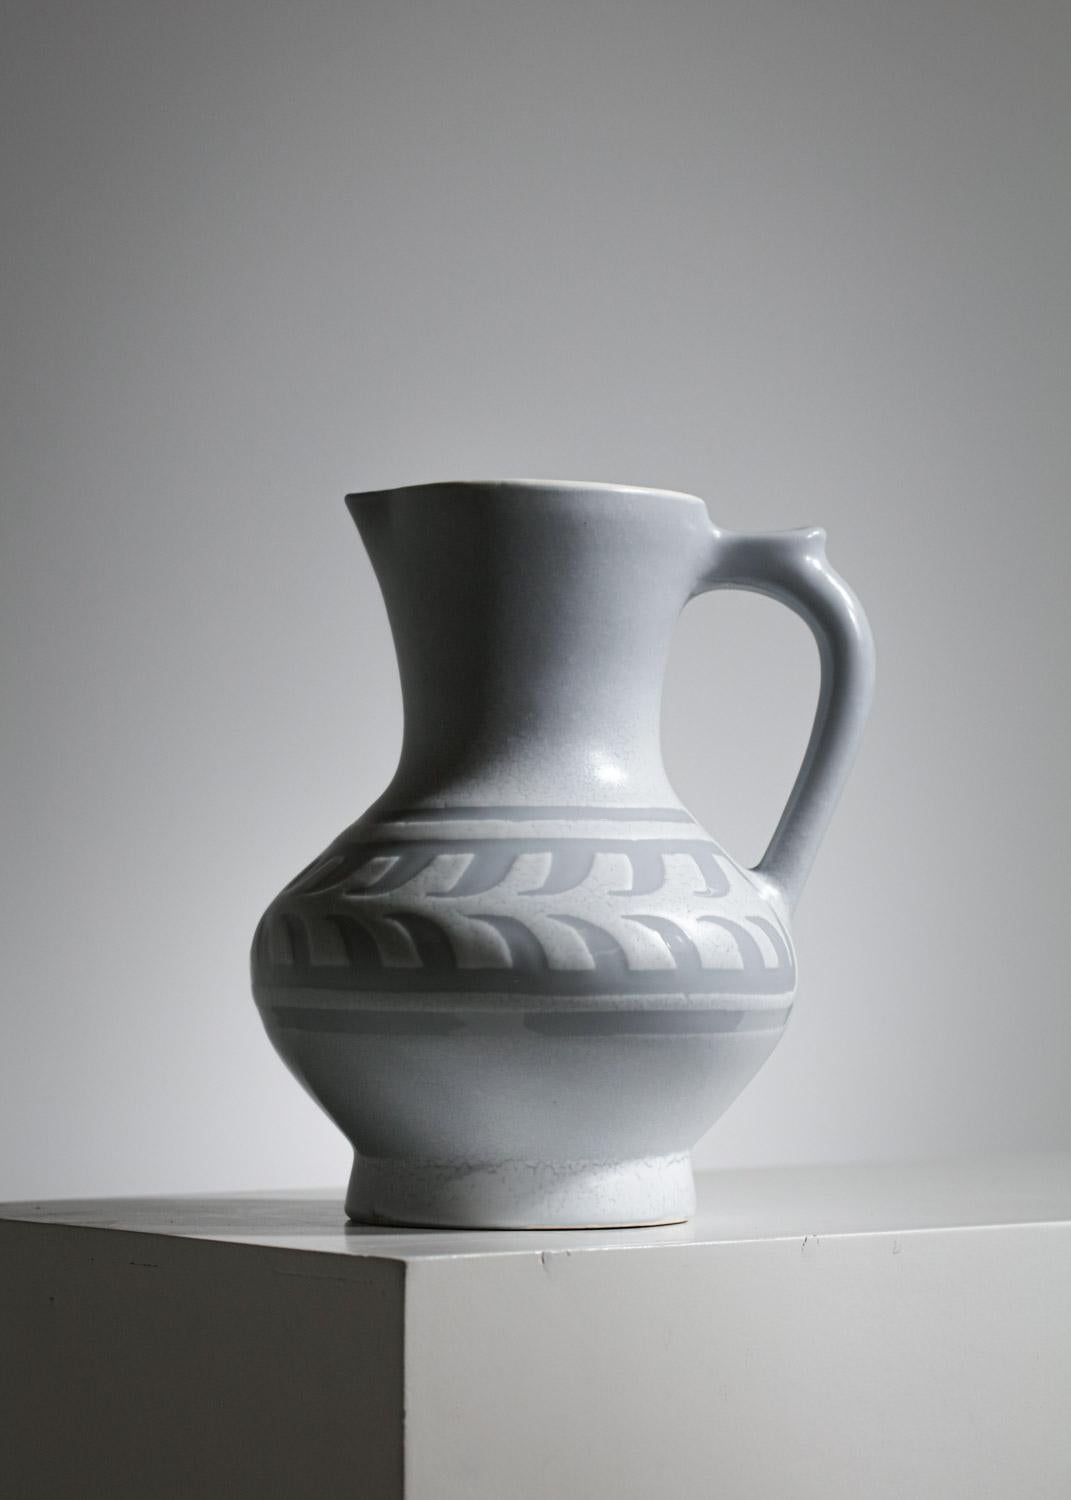 Ceramic Roger Capron ceramic French pitcher pichet vallauris vase 60's - G653 For Sale